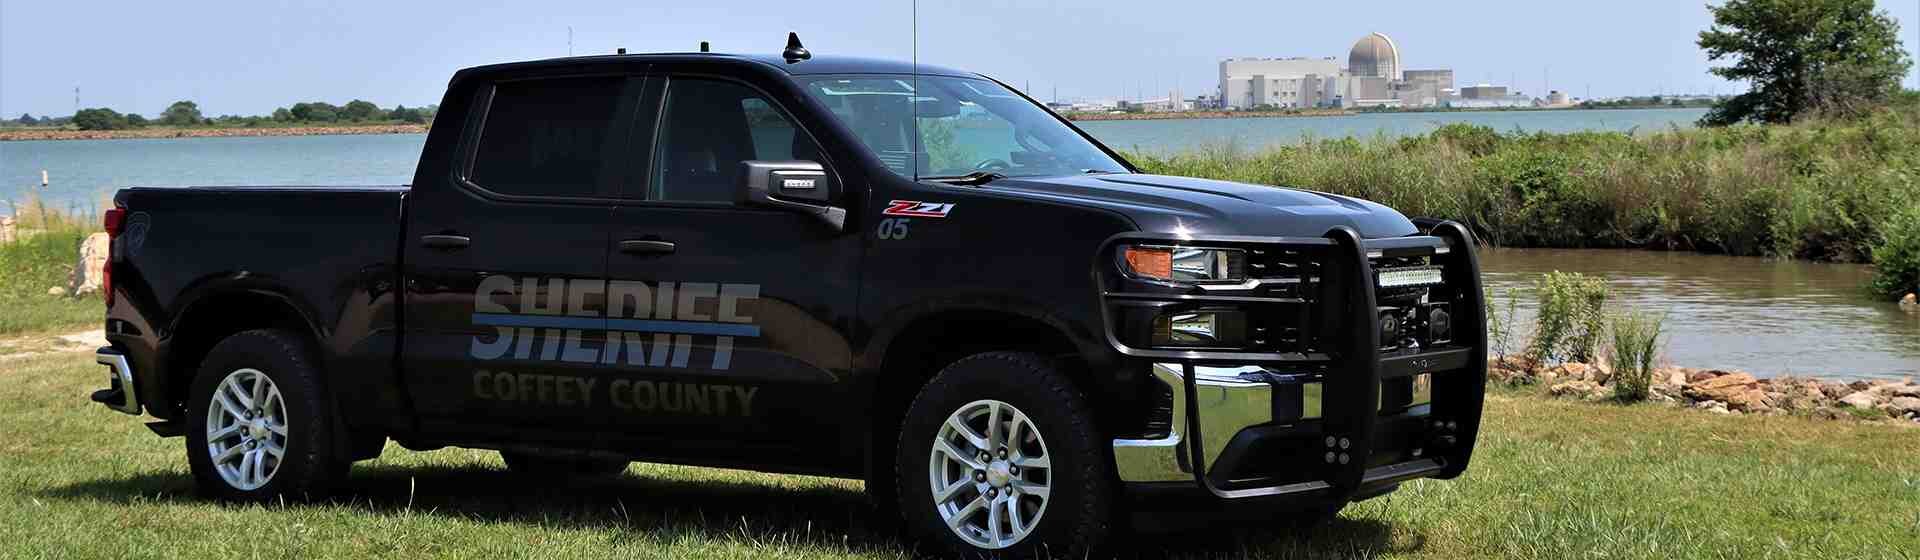 Coffey County sheriff vehicle parked next to a lake.